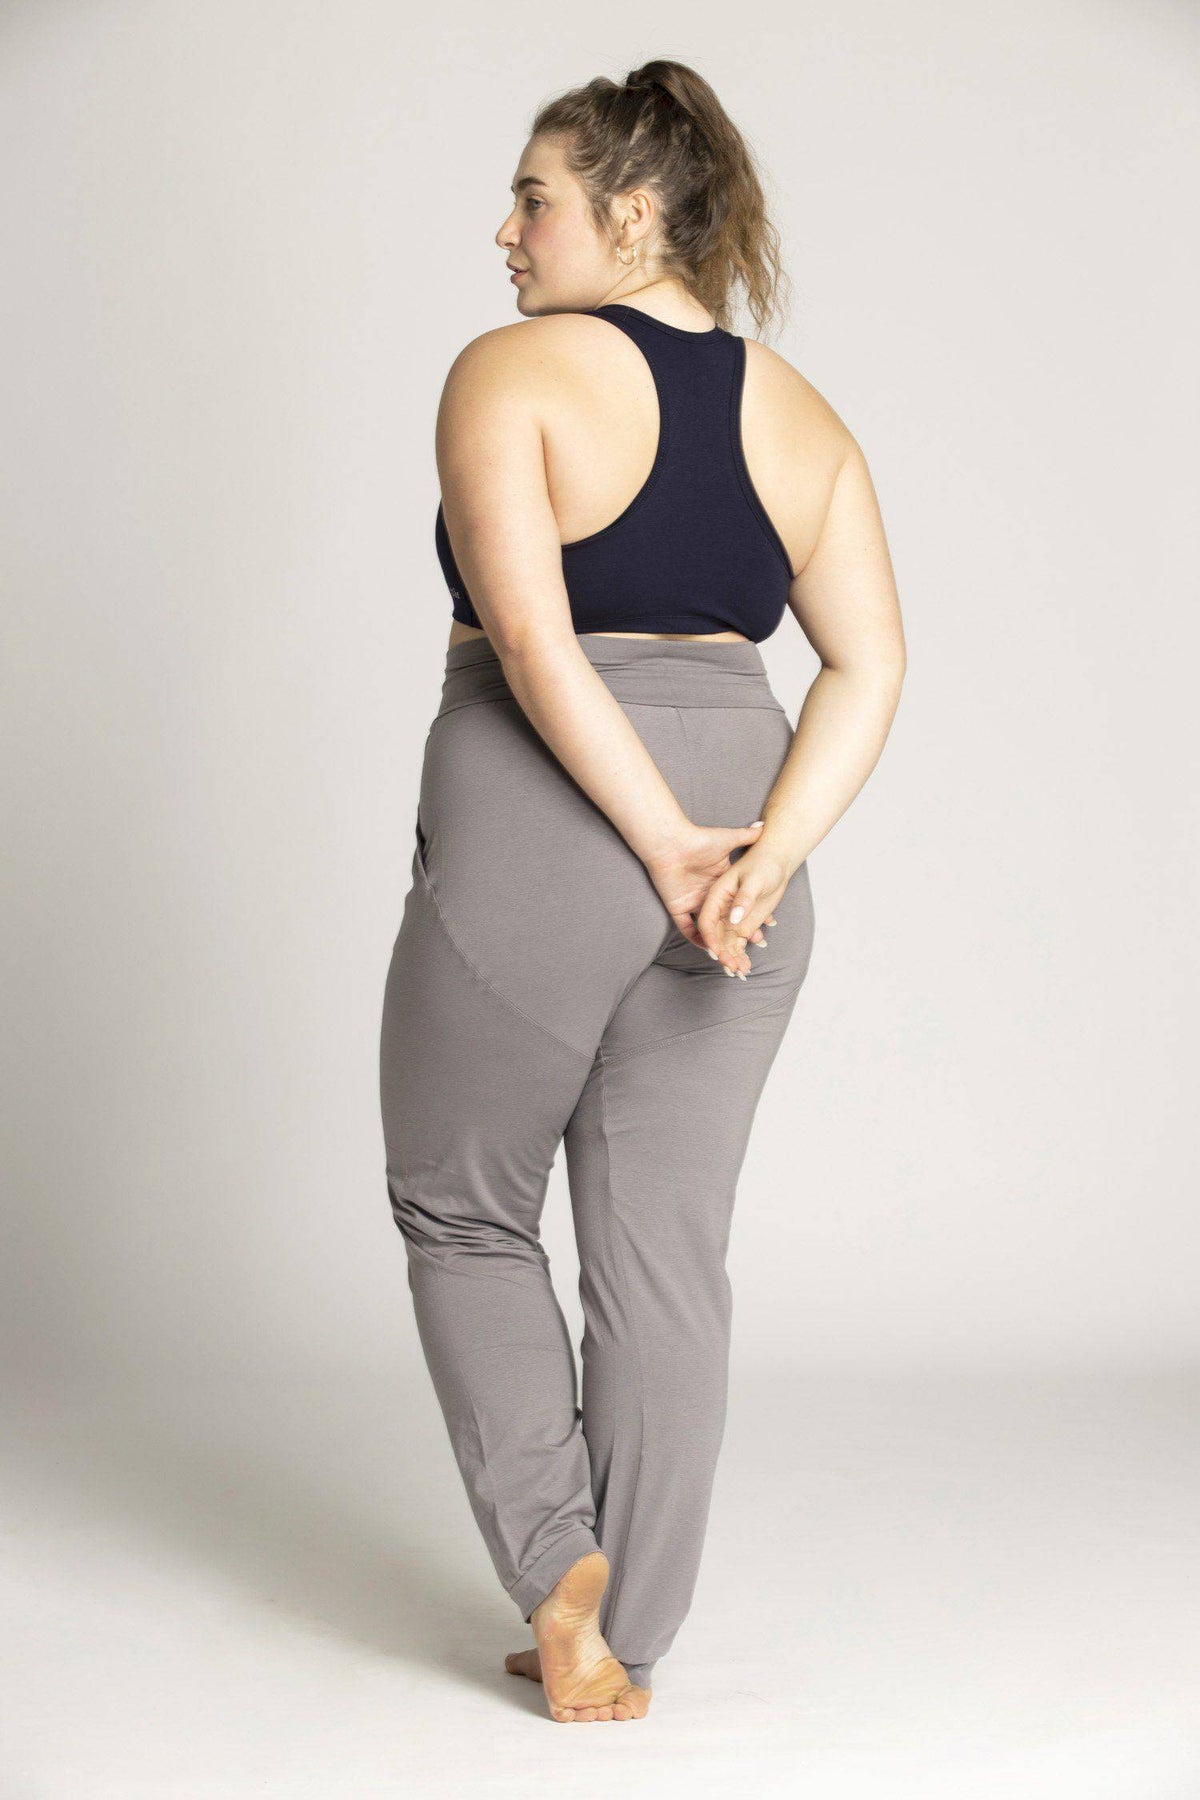 Slouchy Unisex Yoga Pants - womens clothing - Ripple Yoga Wear